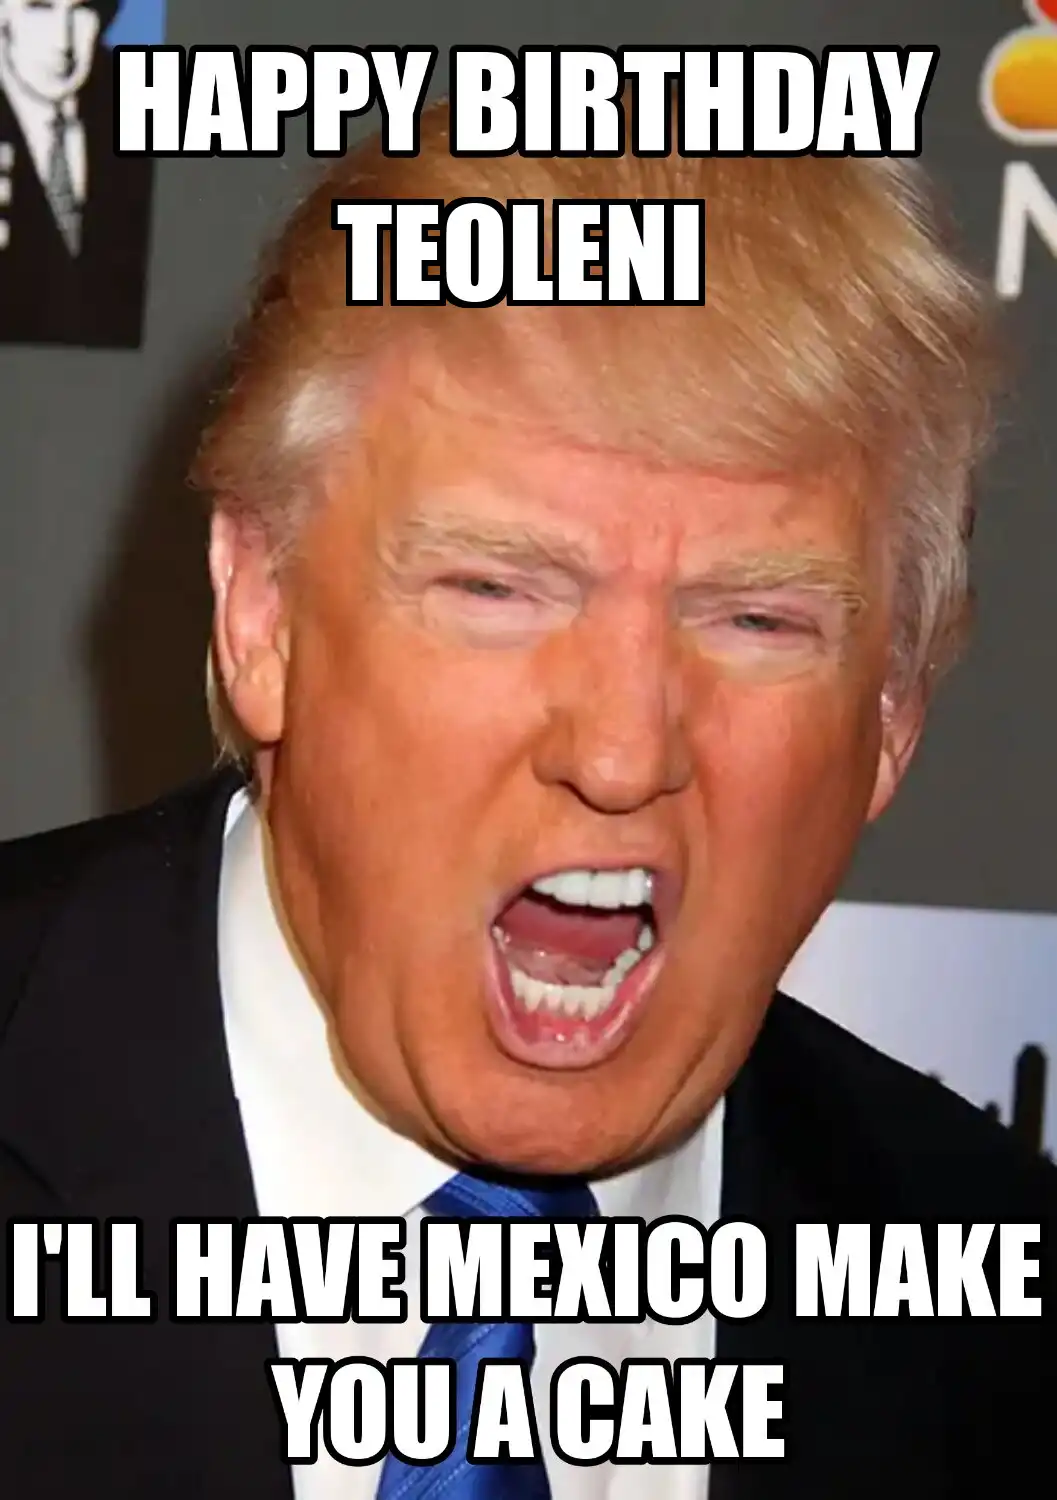 Happy Birthday Teoleni Mexico Make You A Cake Meme